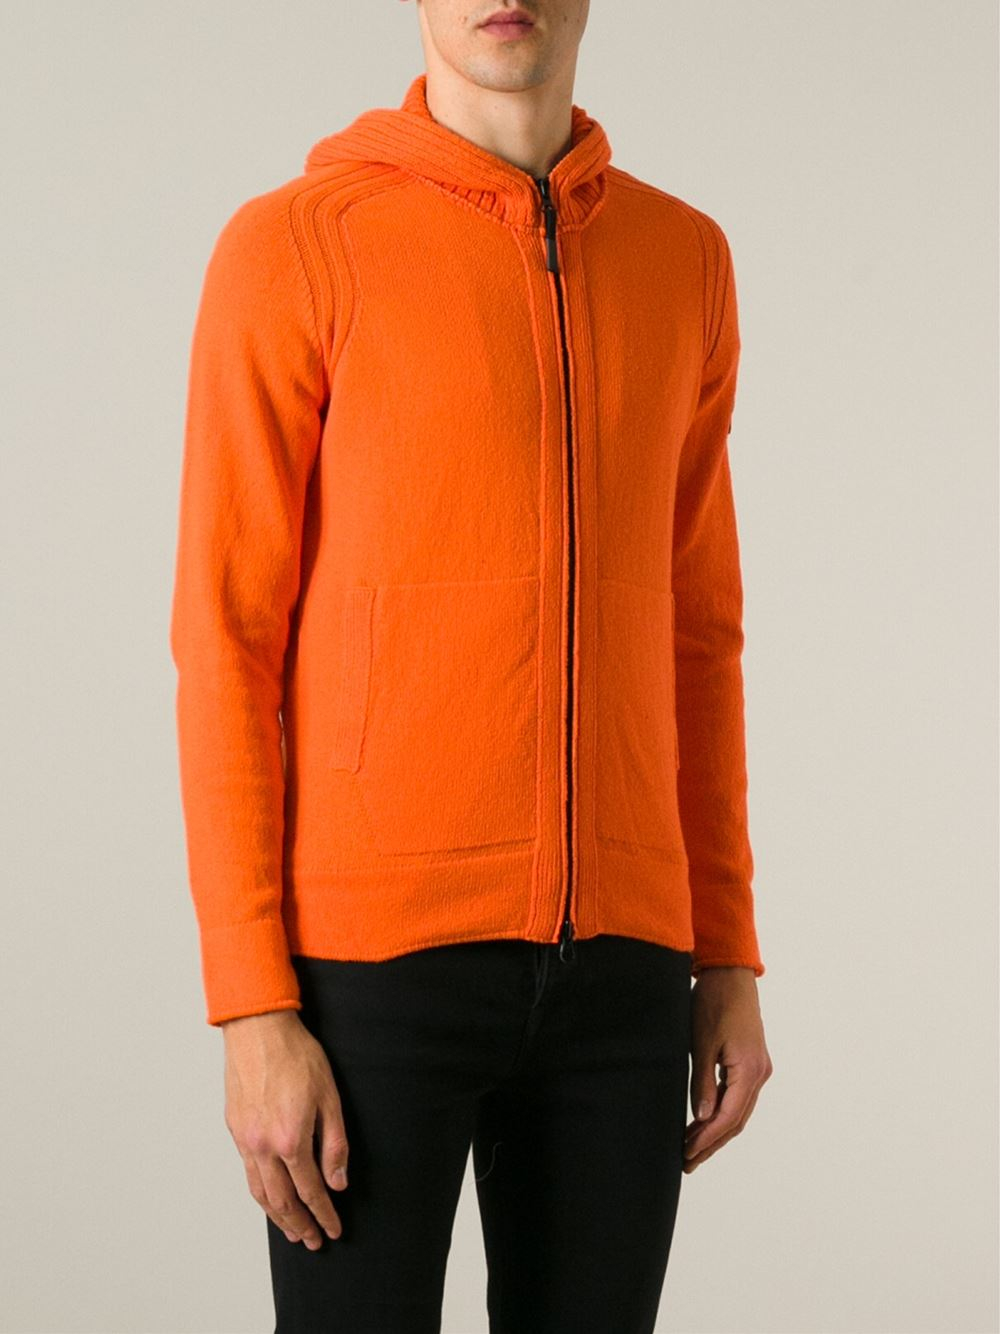 Lyst - Stone Island Knitted Zip-through Hoodie in Orange for Men